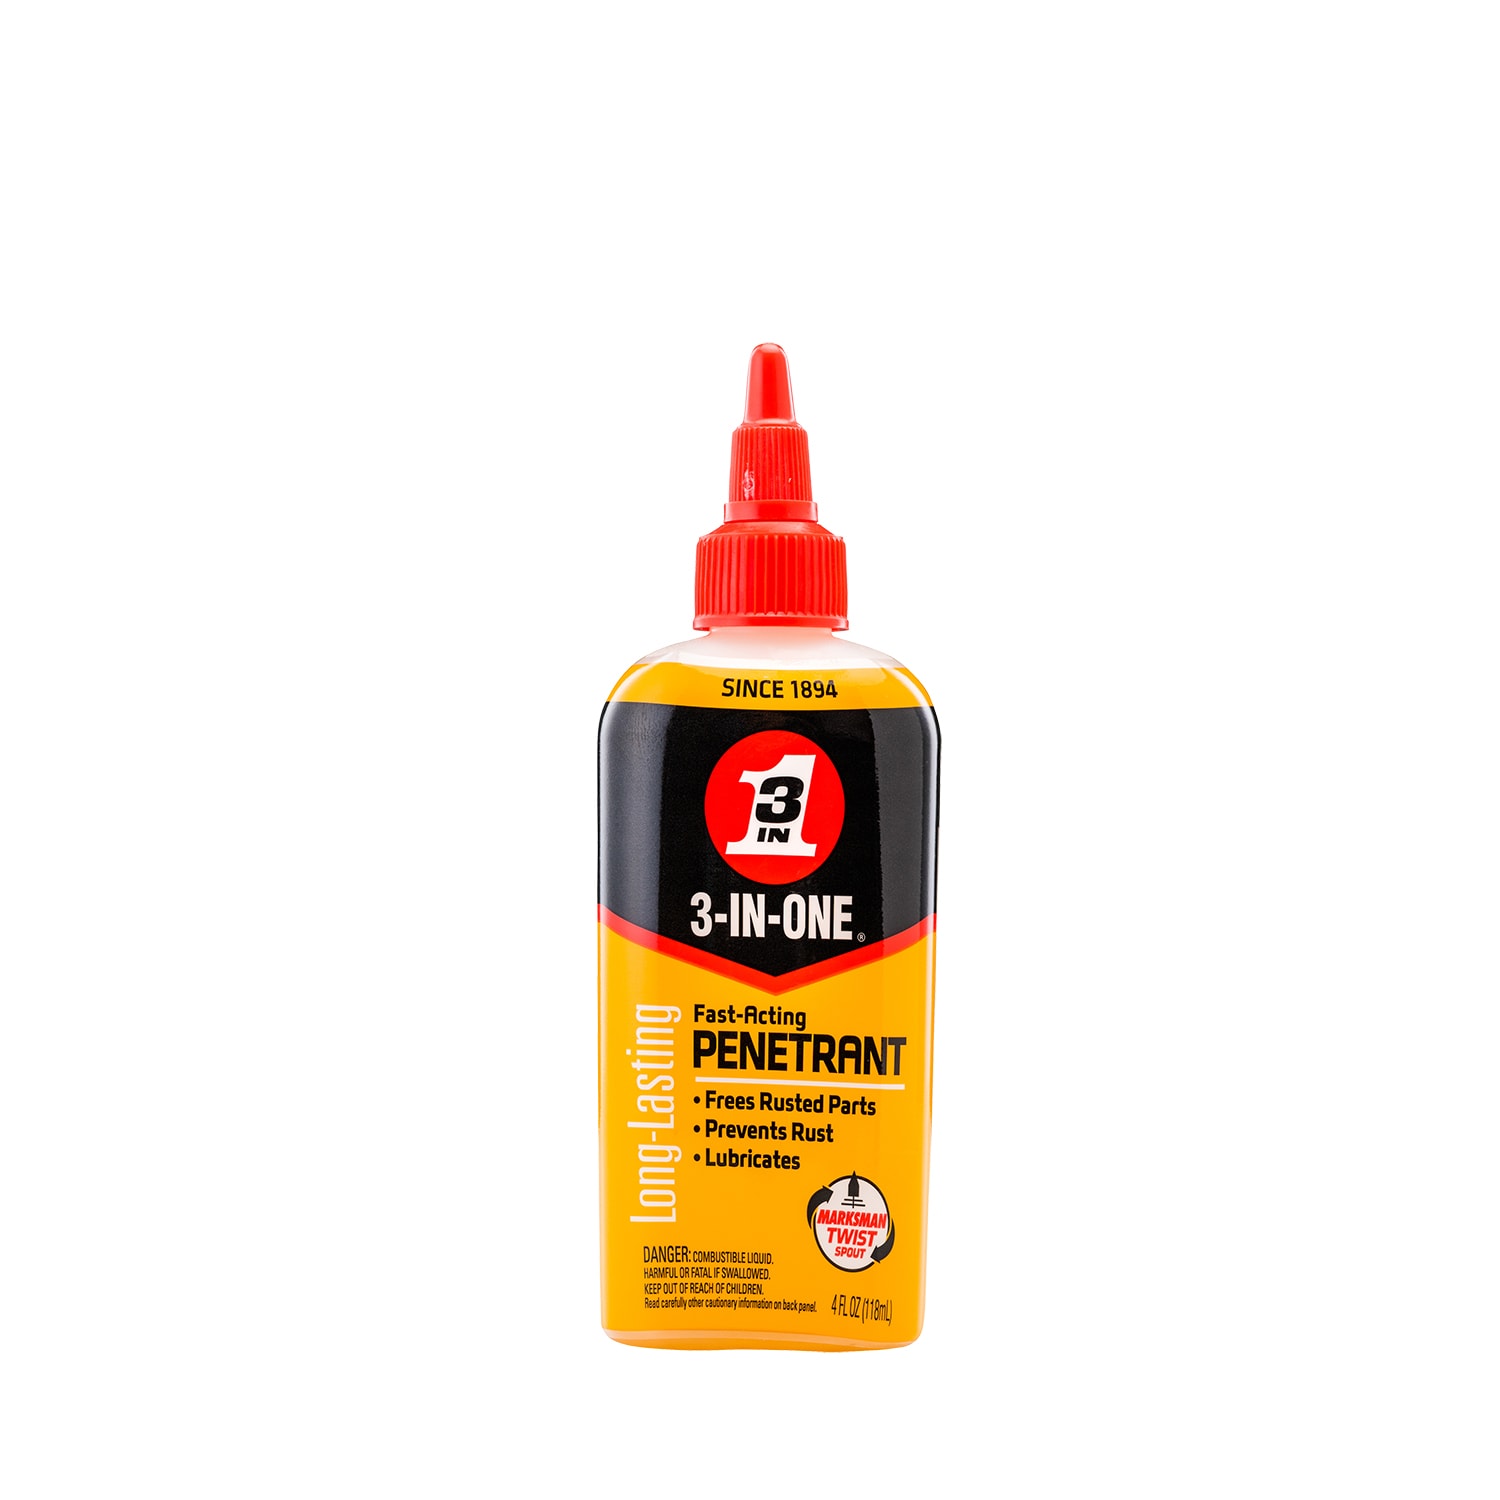 11 oz. Liquid Wrench Penetrating Oil Spray - Greschlers Hardware